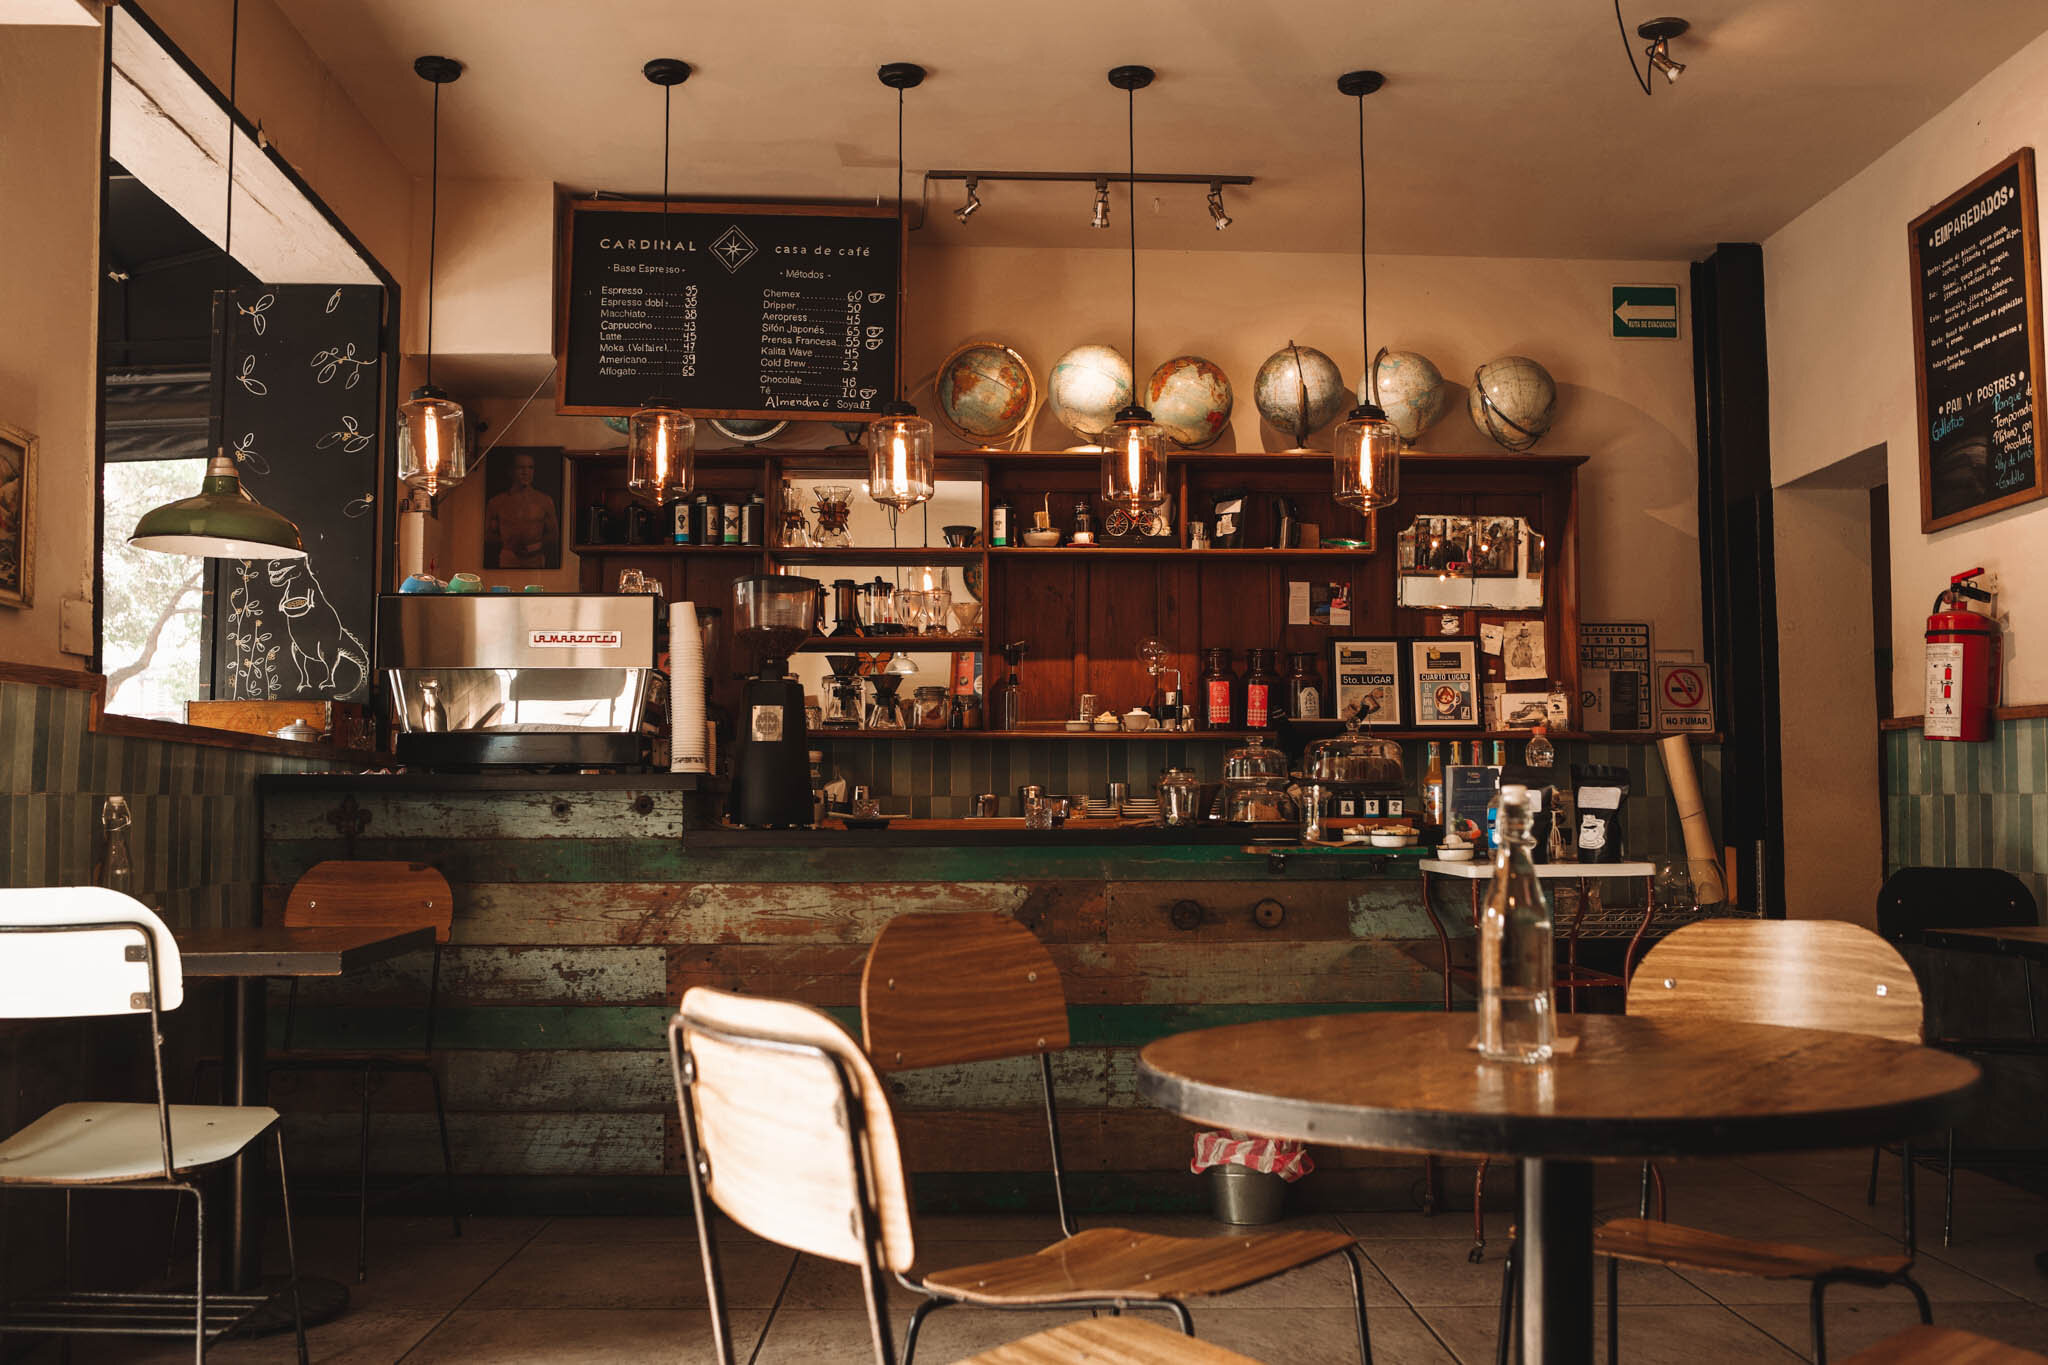 Cardinal coffee shop in La Roma, Mexico City